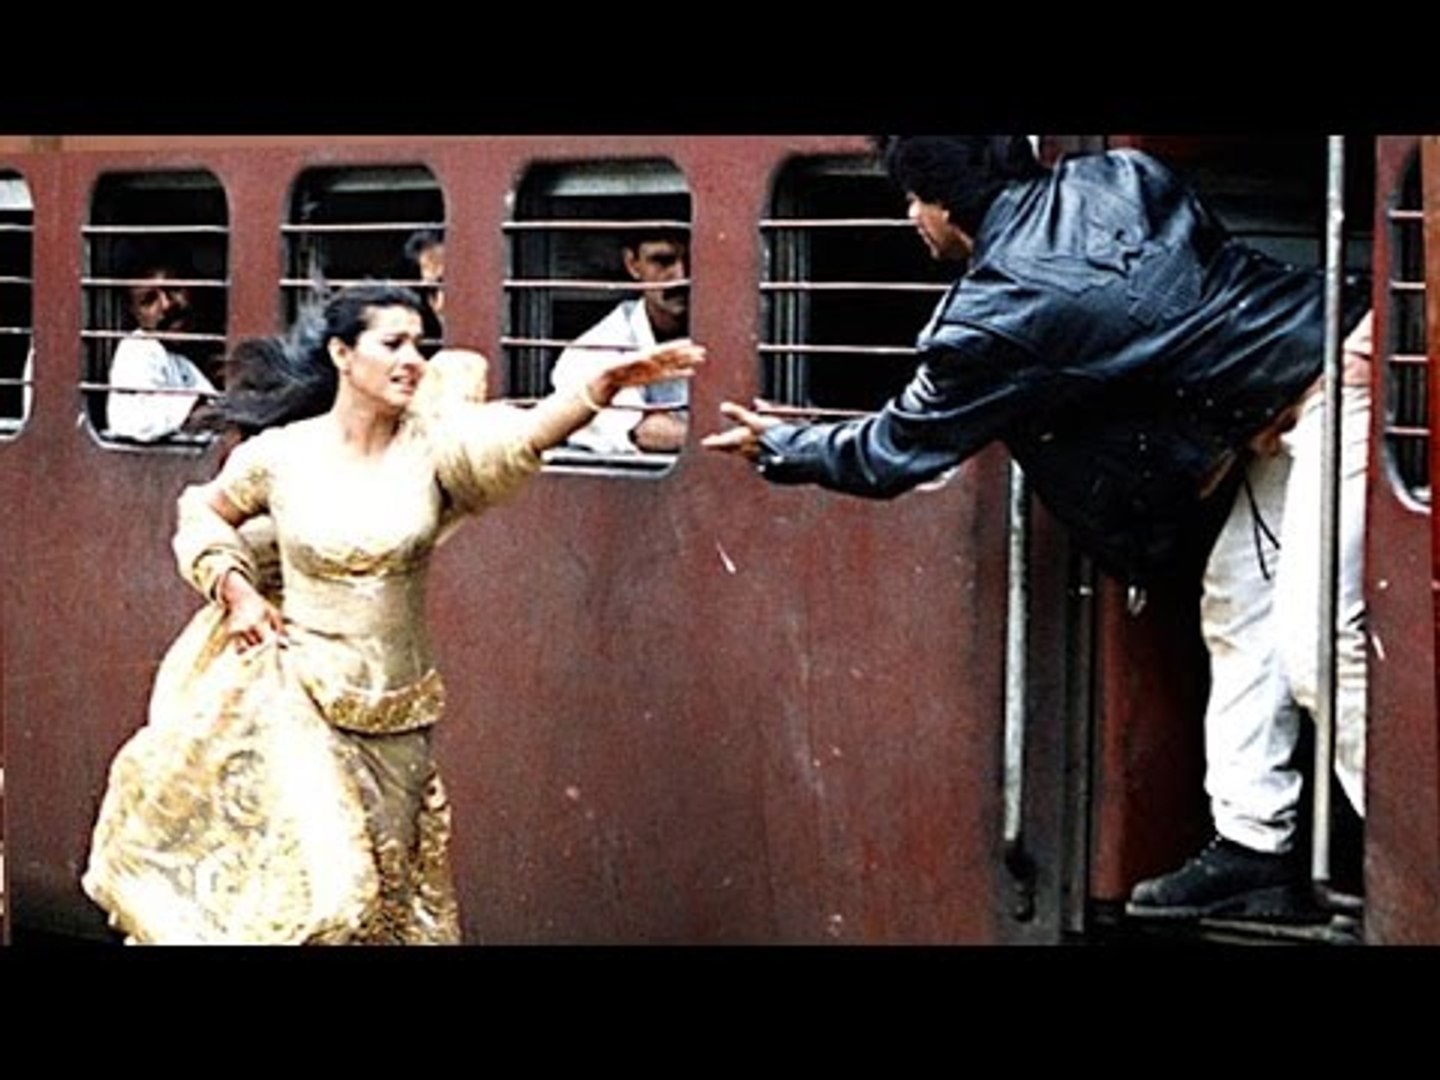 Rajkummar Rao & Patralekhaa's Remake Of DDLJ's Last Scene Will Make You Cry With Laughter RVCJ Media